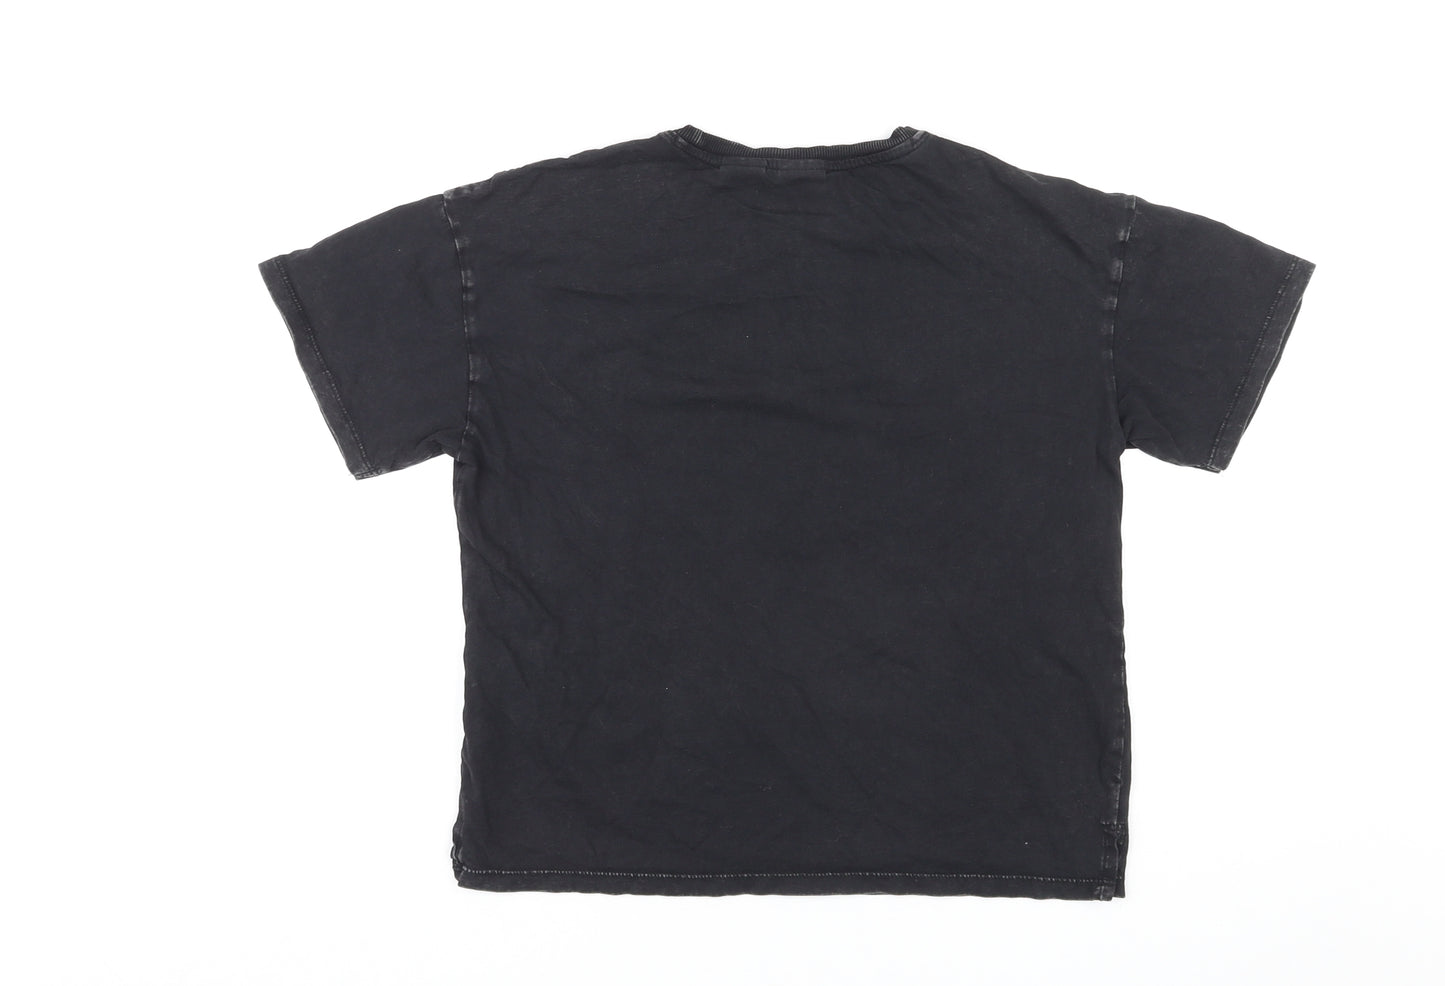 Zara Girls Black Cotton Basic T-Shirt Size 11-12 Years Round Neck Pullover - Nirvana